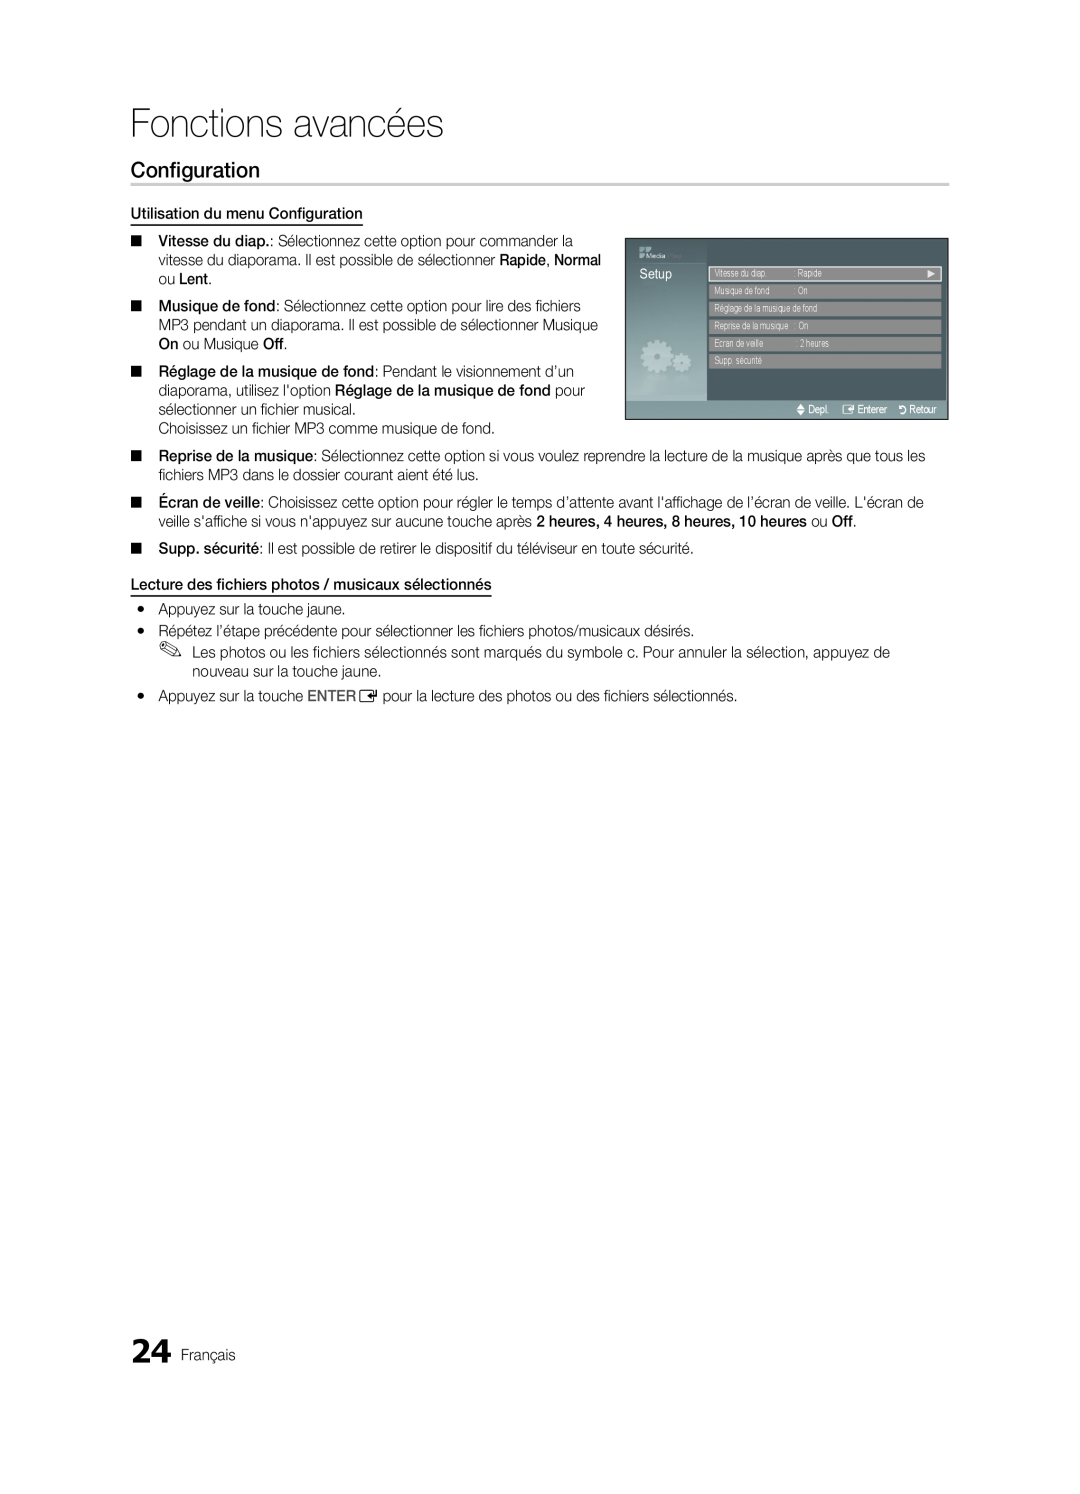 Samsung BN68-02620B-06 user manual Configuration, Fonctions avancées 